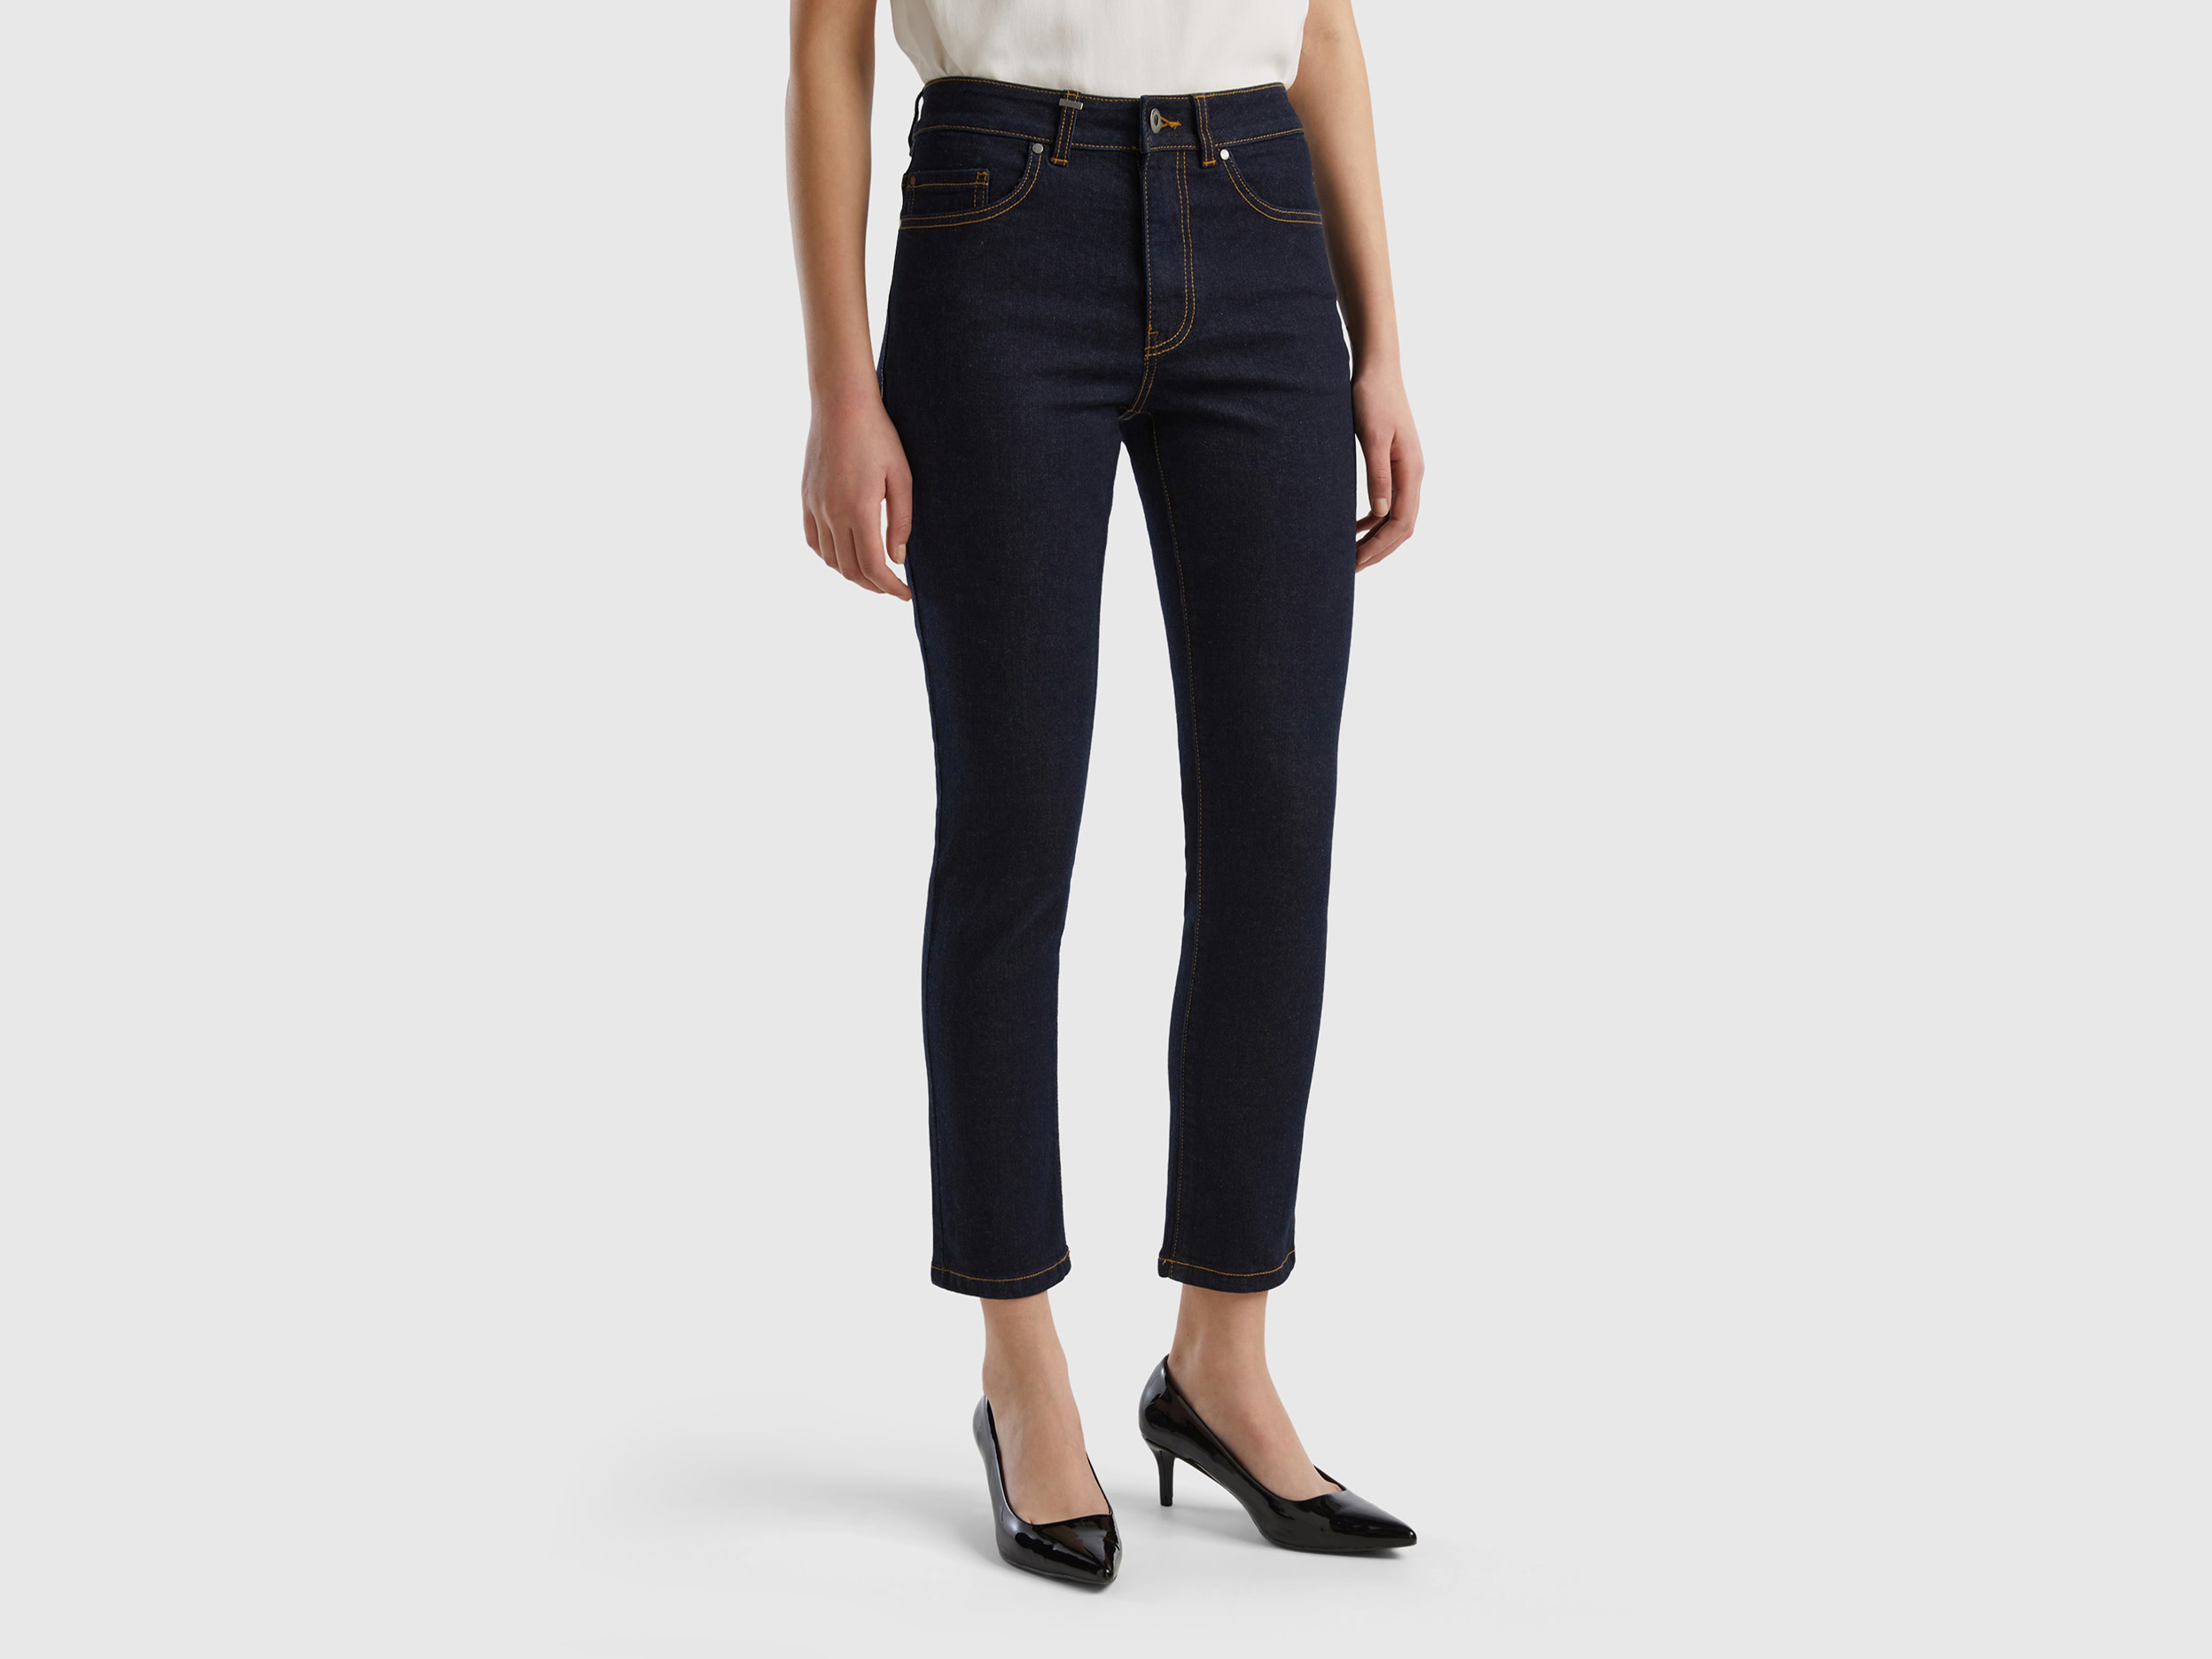 Benetton, Slim Fit High-waisted Jeans, size 26, Dark Blue, Women